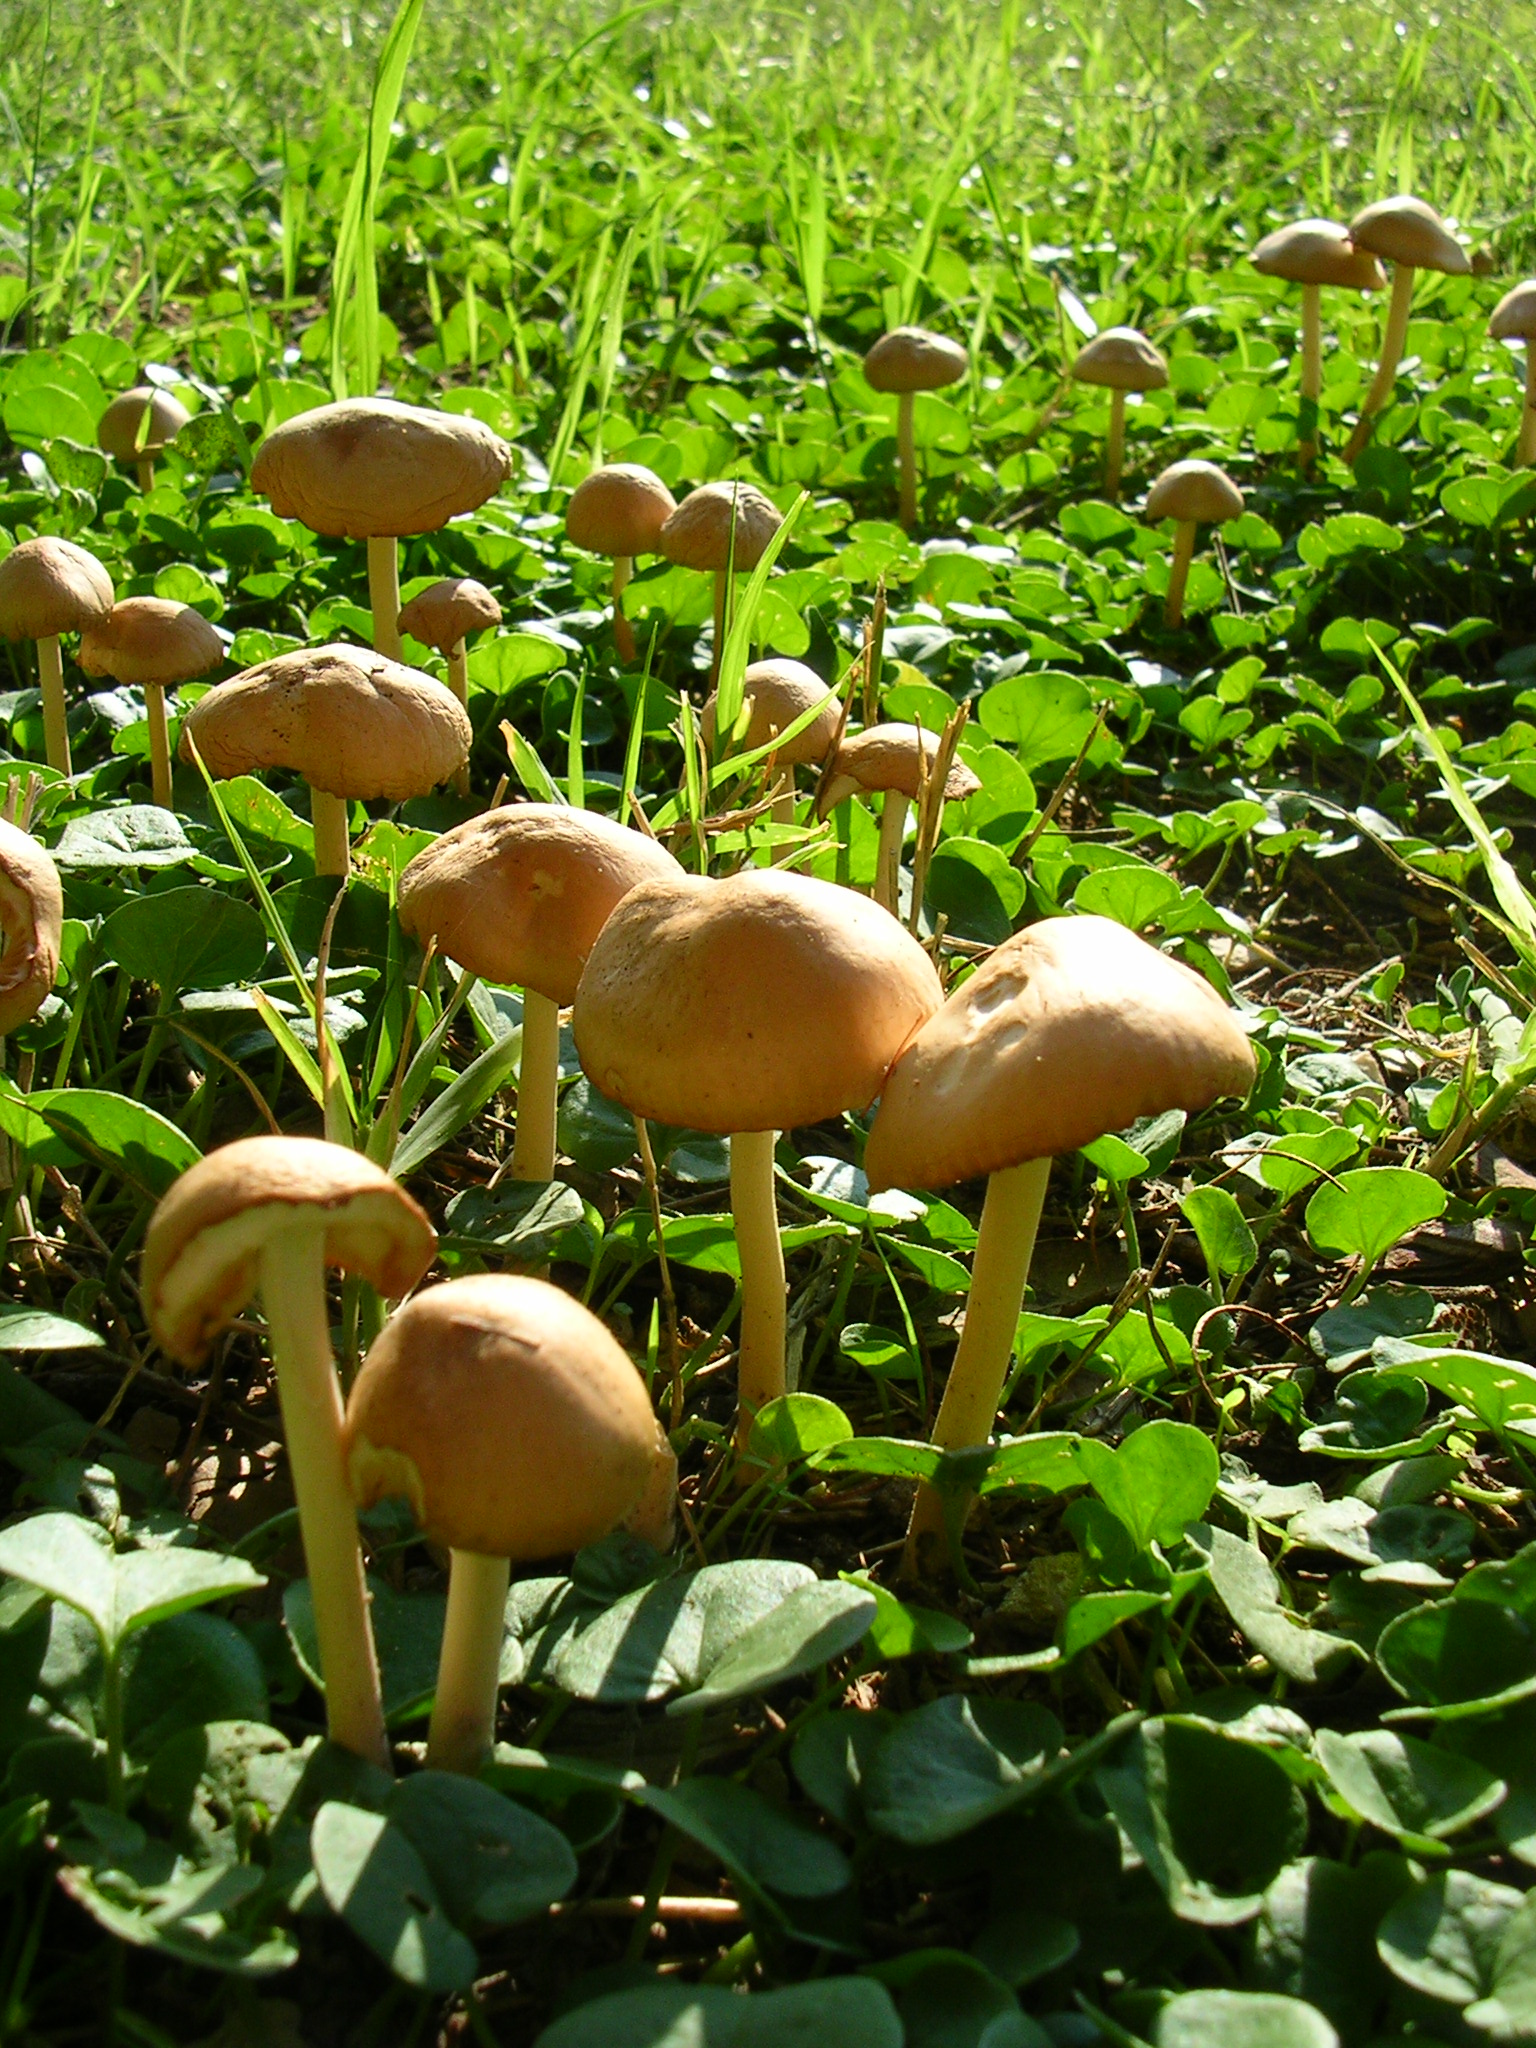 Mushrooms in a green field